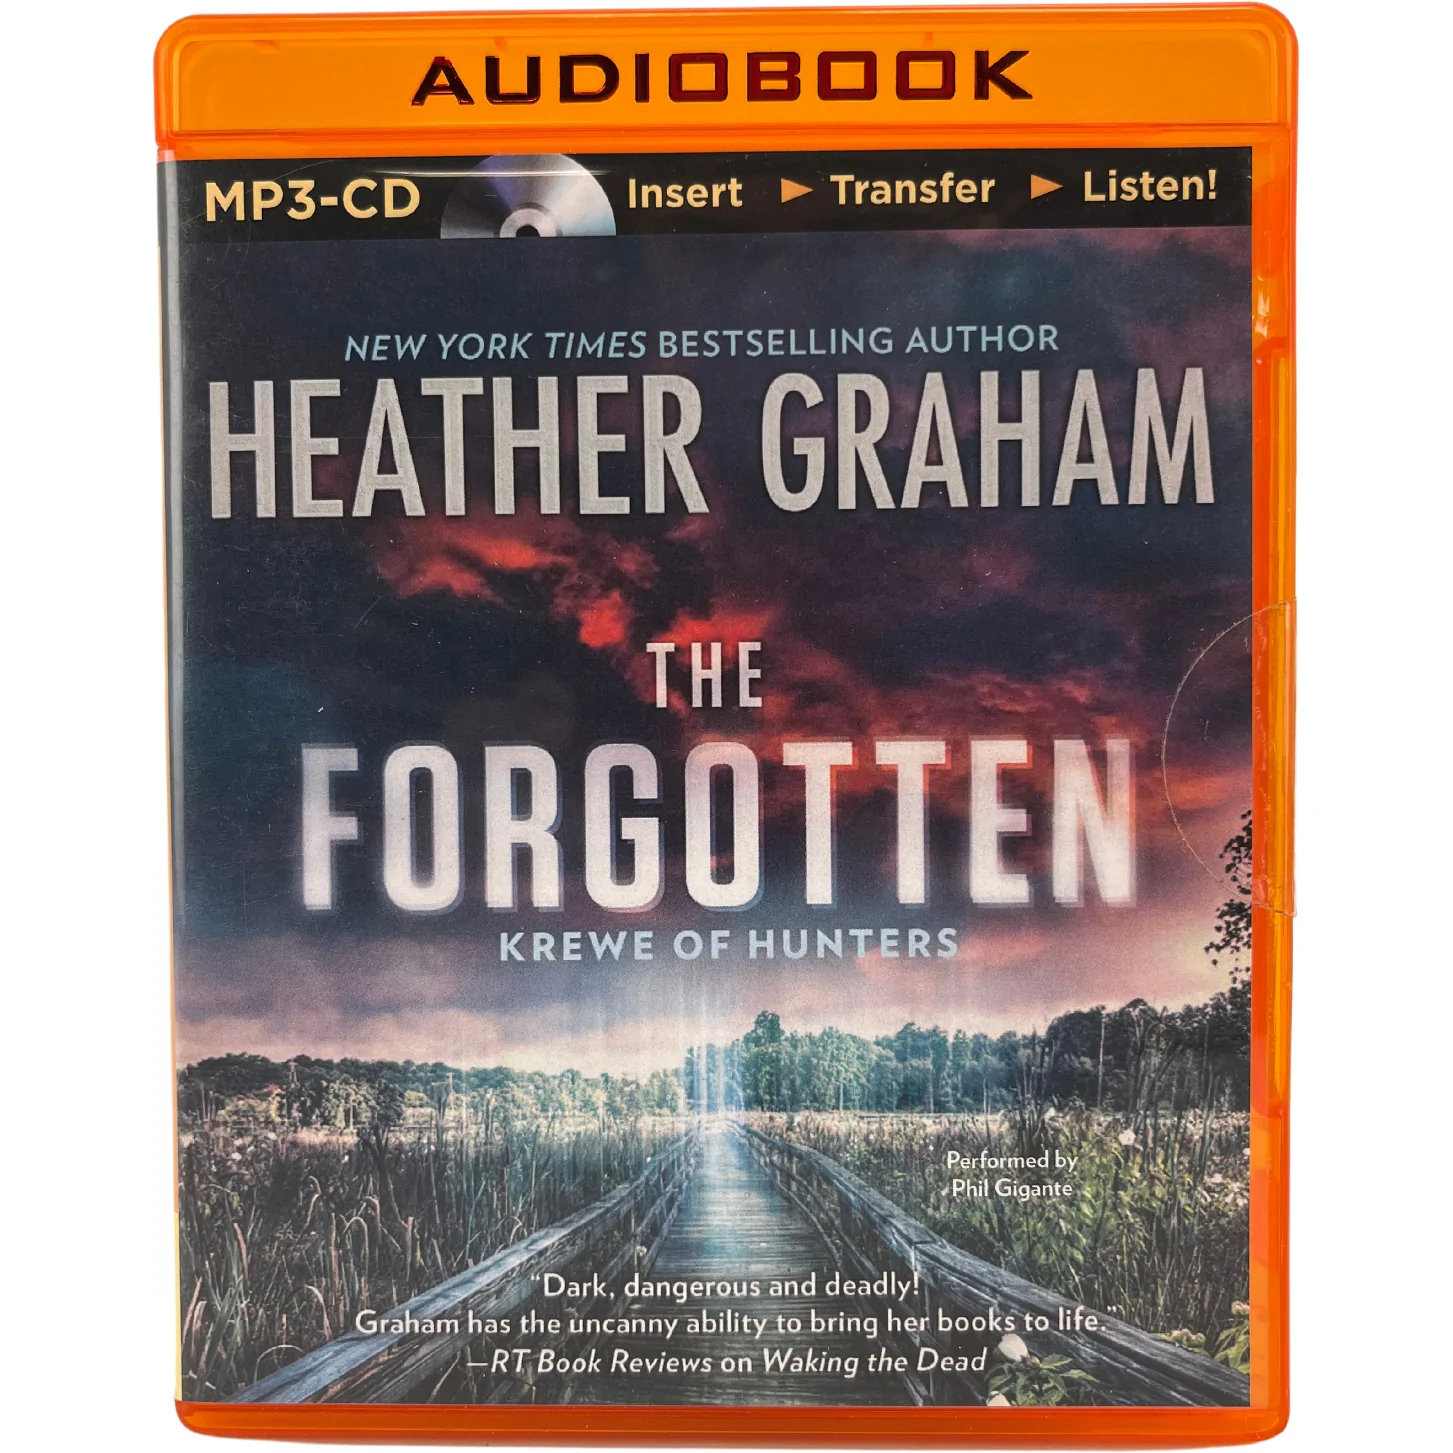 Audiobook "The Forgotten" / Author Heather Graham / MP3-CD